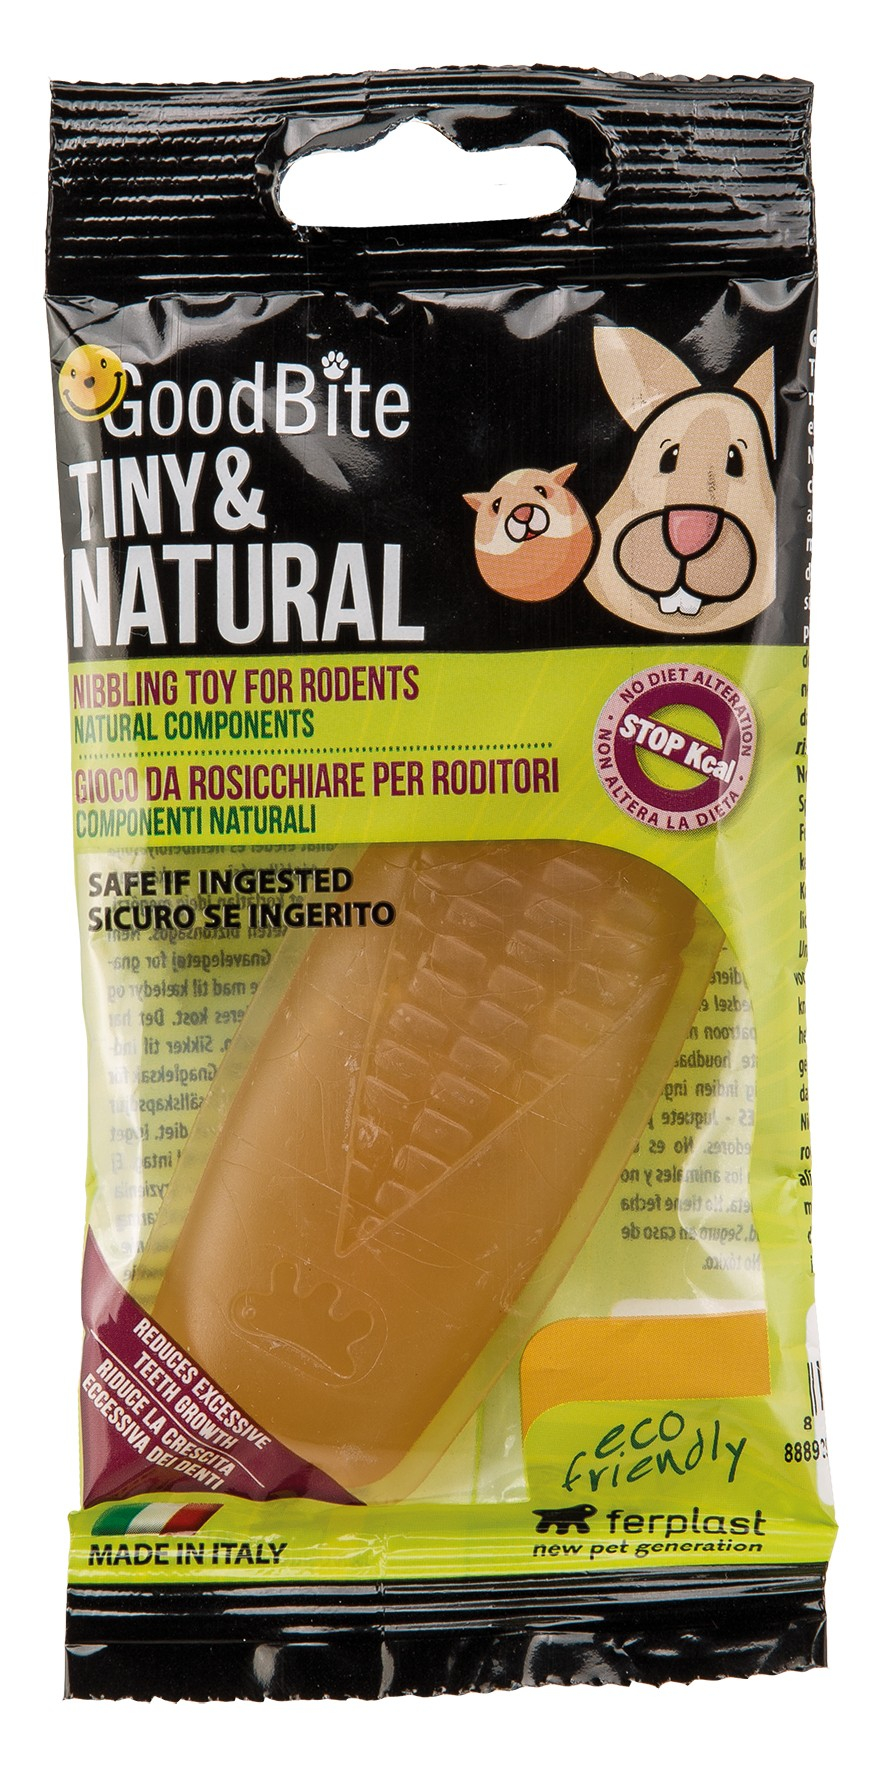 Goodbite Tiny & Natural Corncob Bag Nagespielzeug